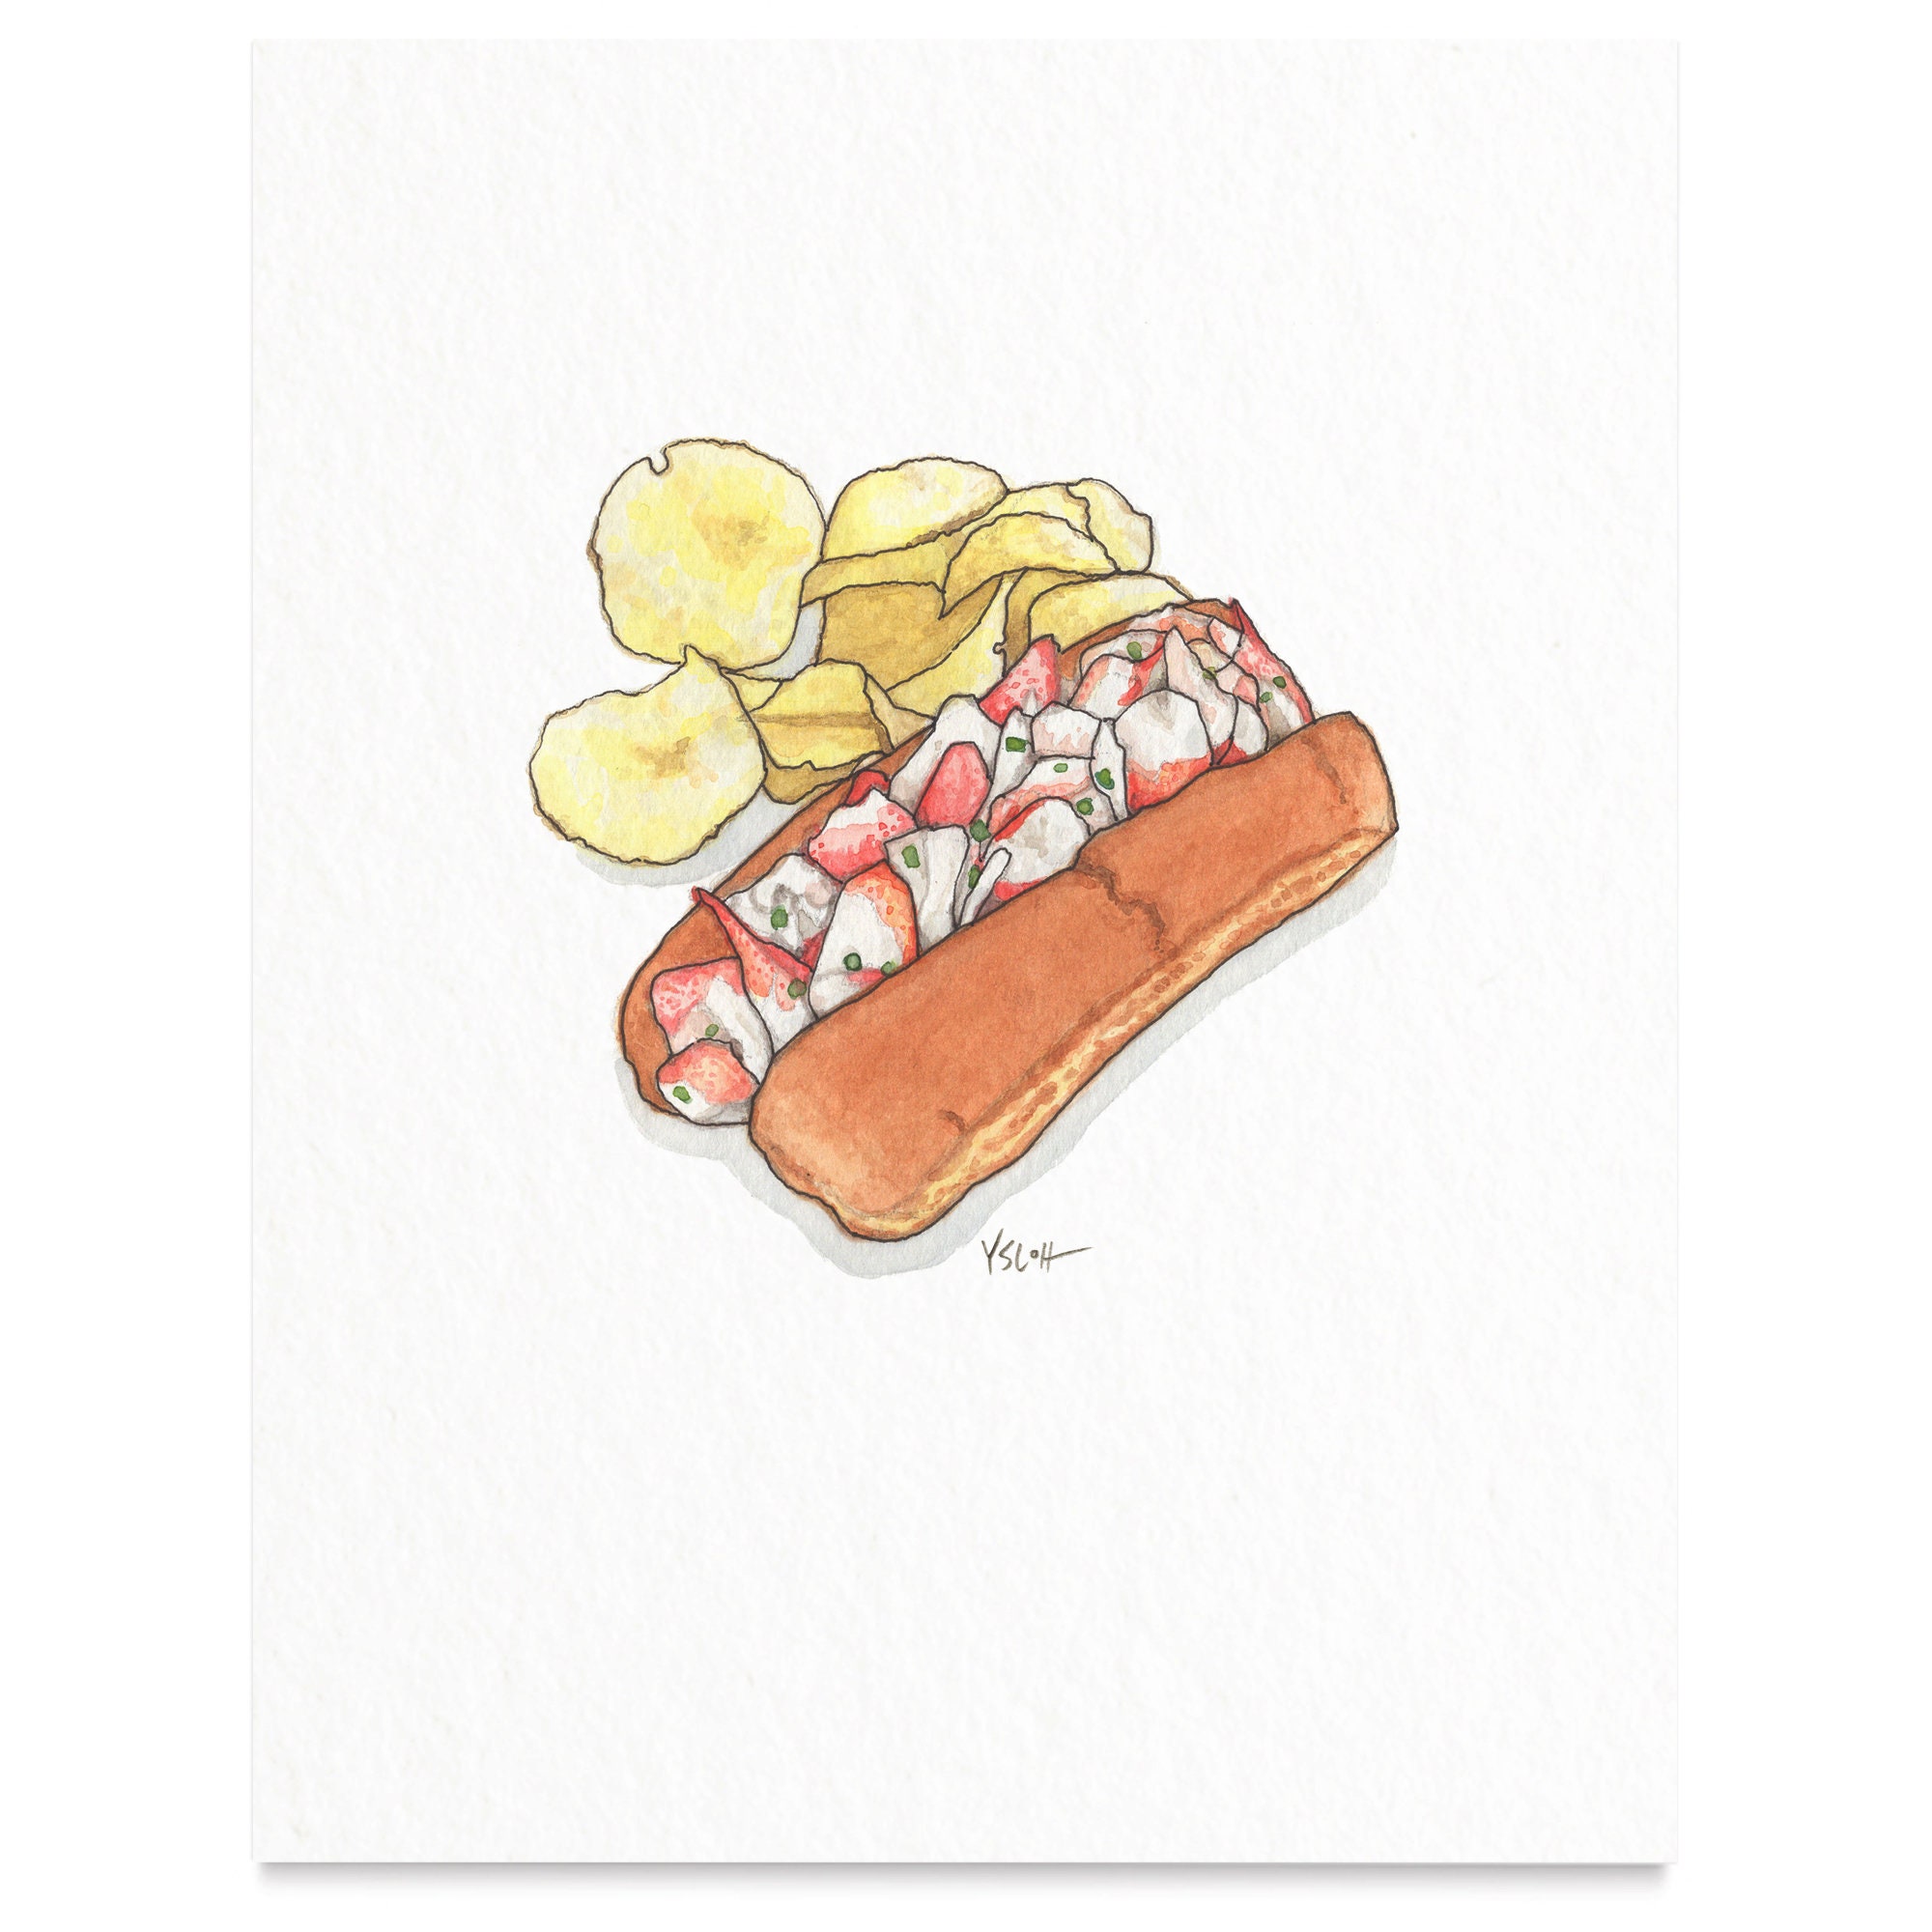 Lobster Roll 8.5x11 Art Prints/Watercolor Illustration Print Wall Home Decor Summer Food Sandwich Seafood